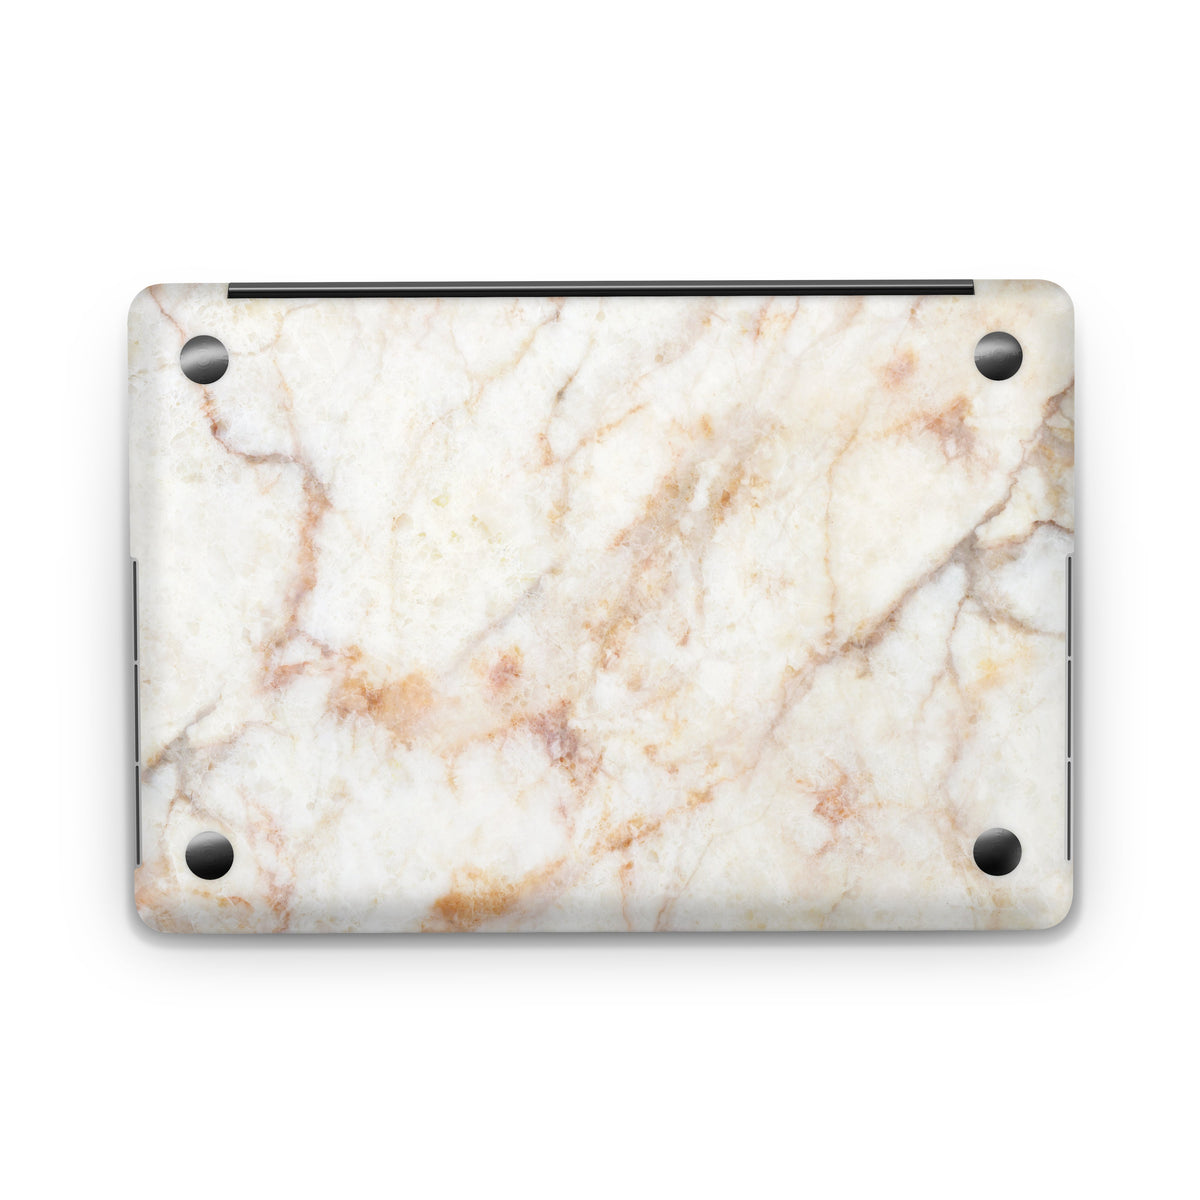 Vanilla Marble (MacBook Skin)